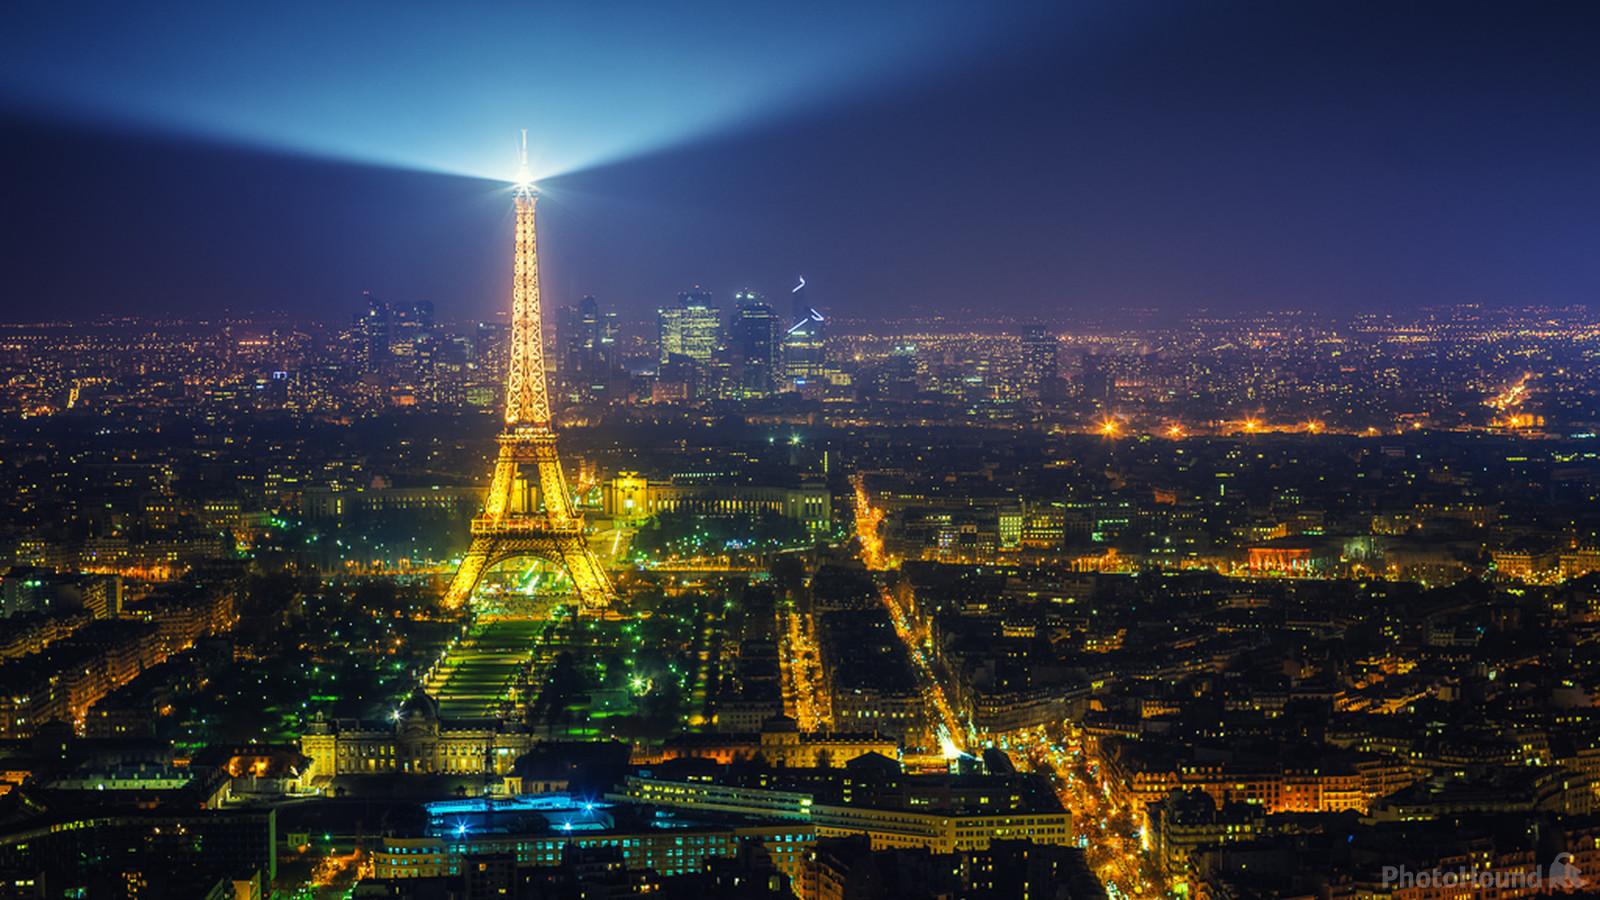 Image of Tour Montparnasse by JAMES BILLINGS